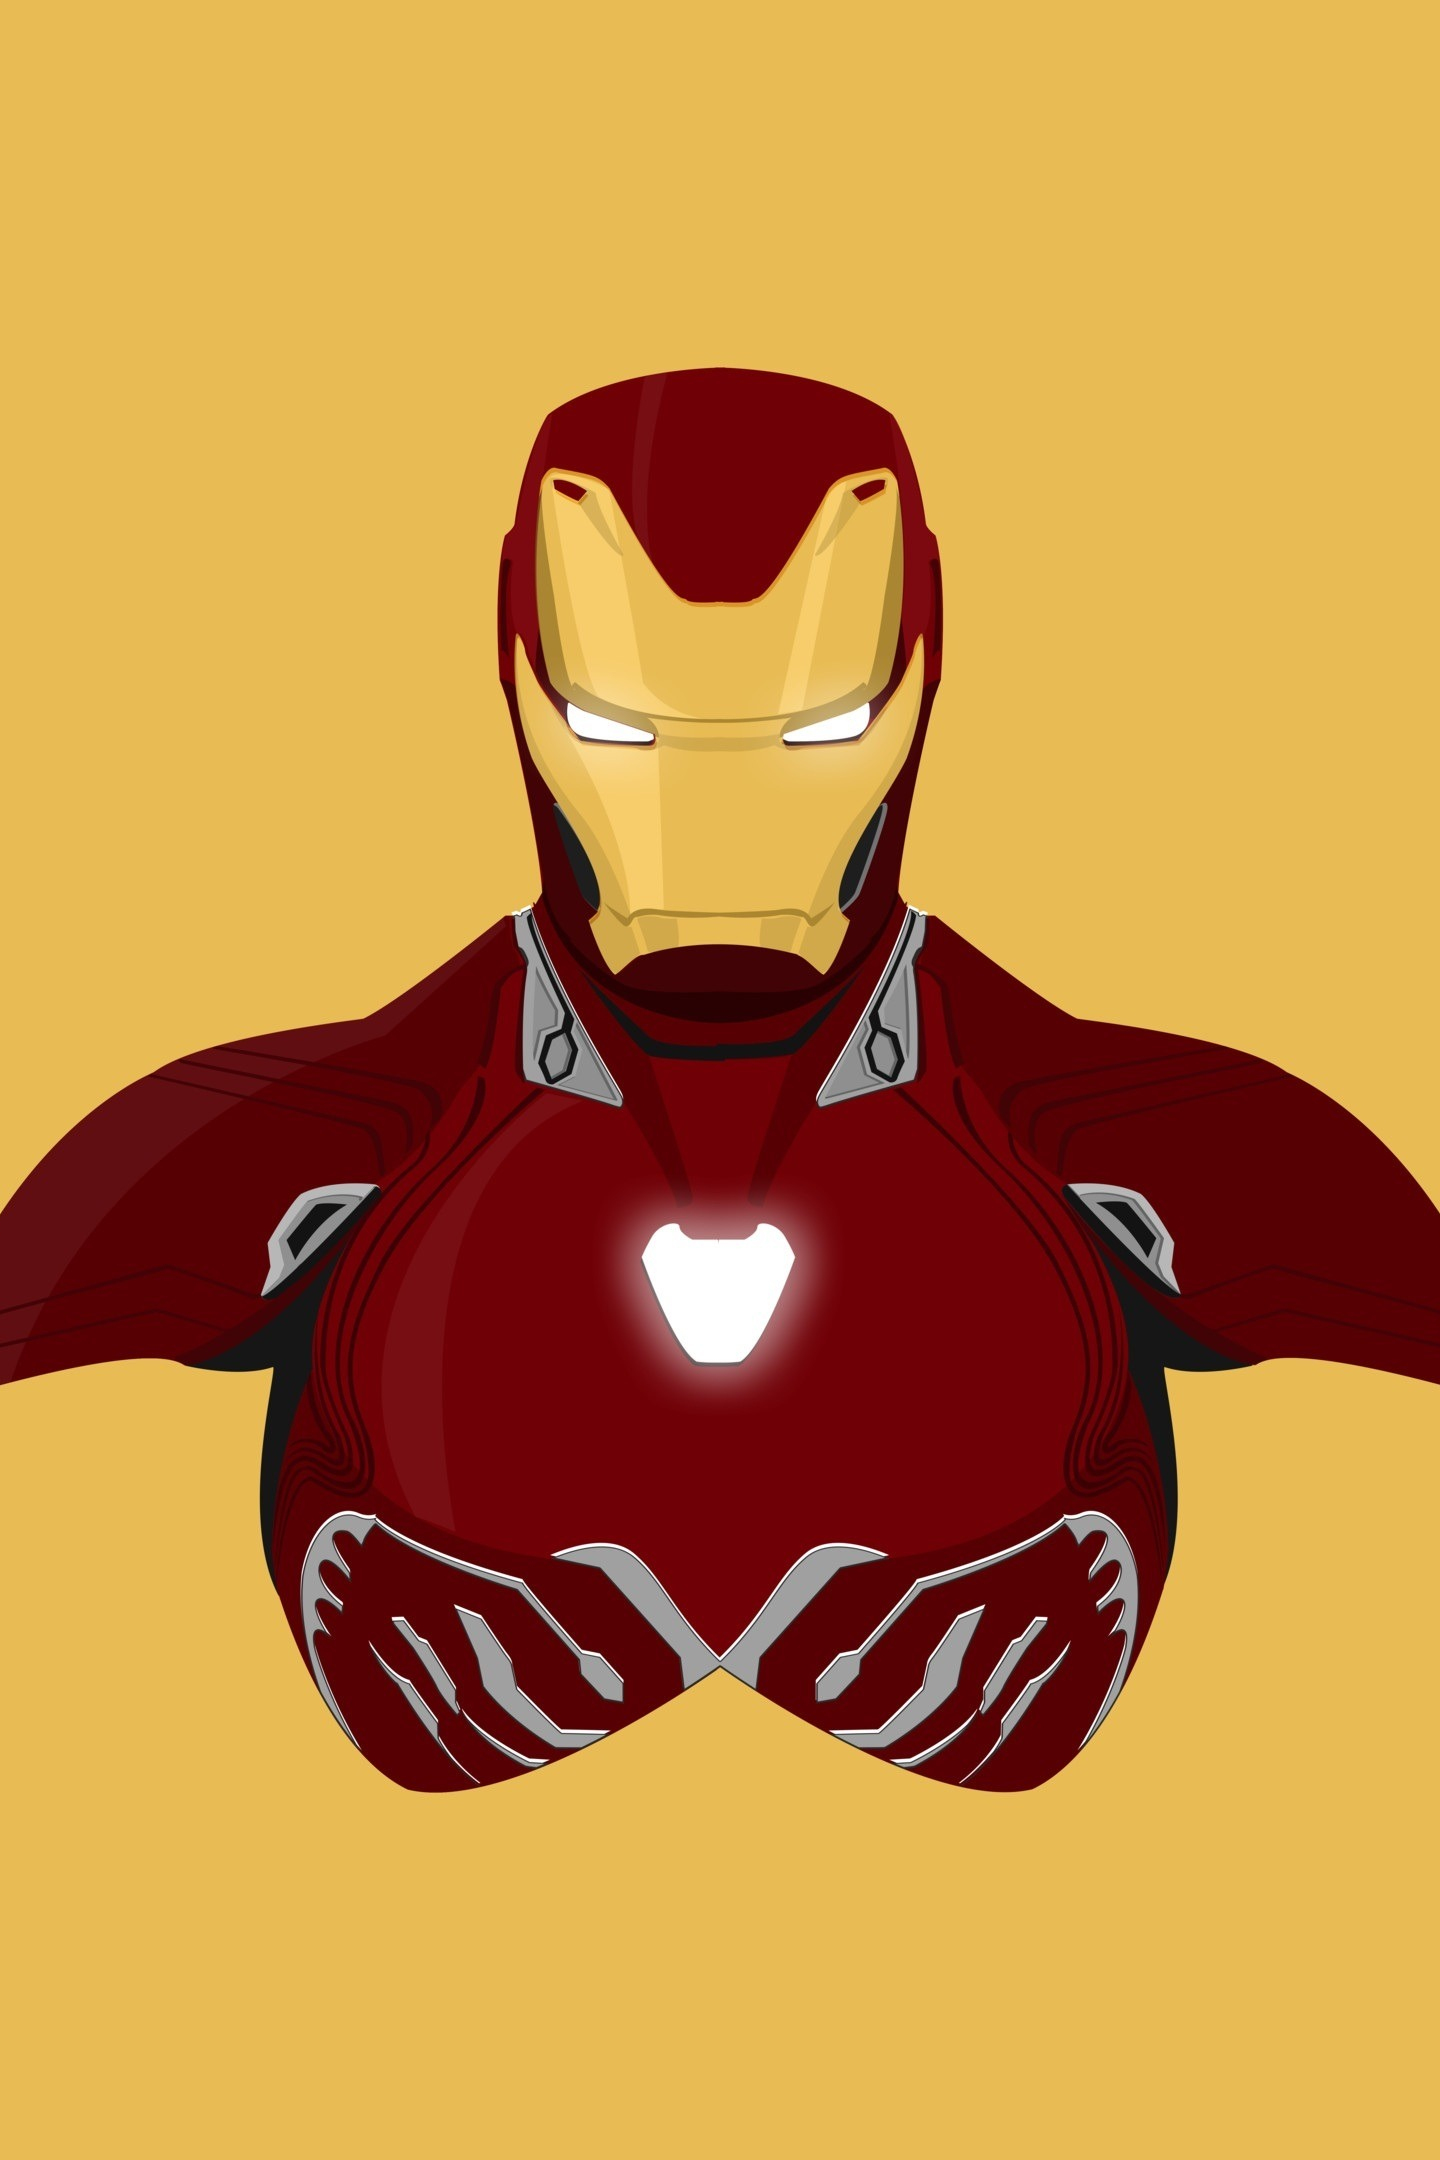 Download wallpaper 1440x2560 iron man, superhero, minimal, iron suit, qhd  samsung galaxy s6, s7, edge, note, lg g4, 1440x2560 hd background, 3627